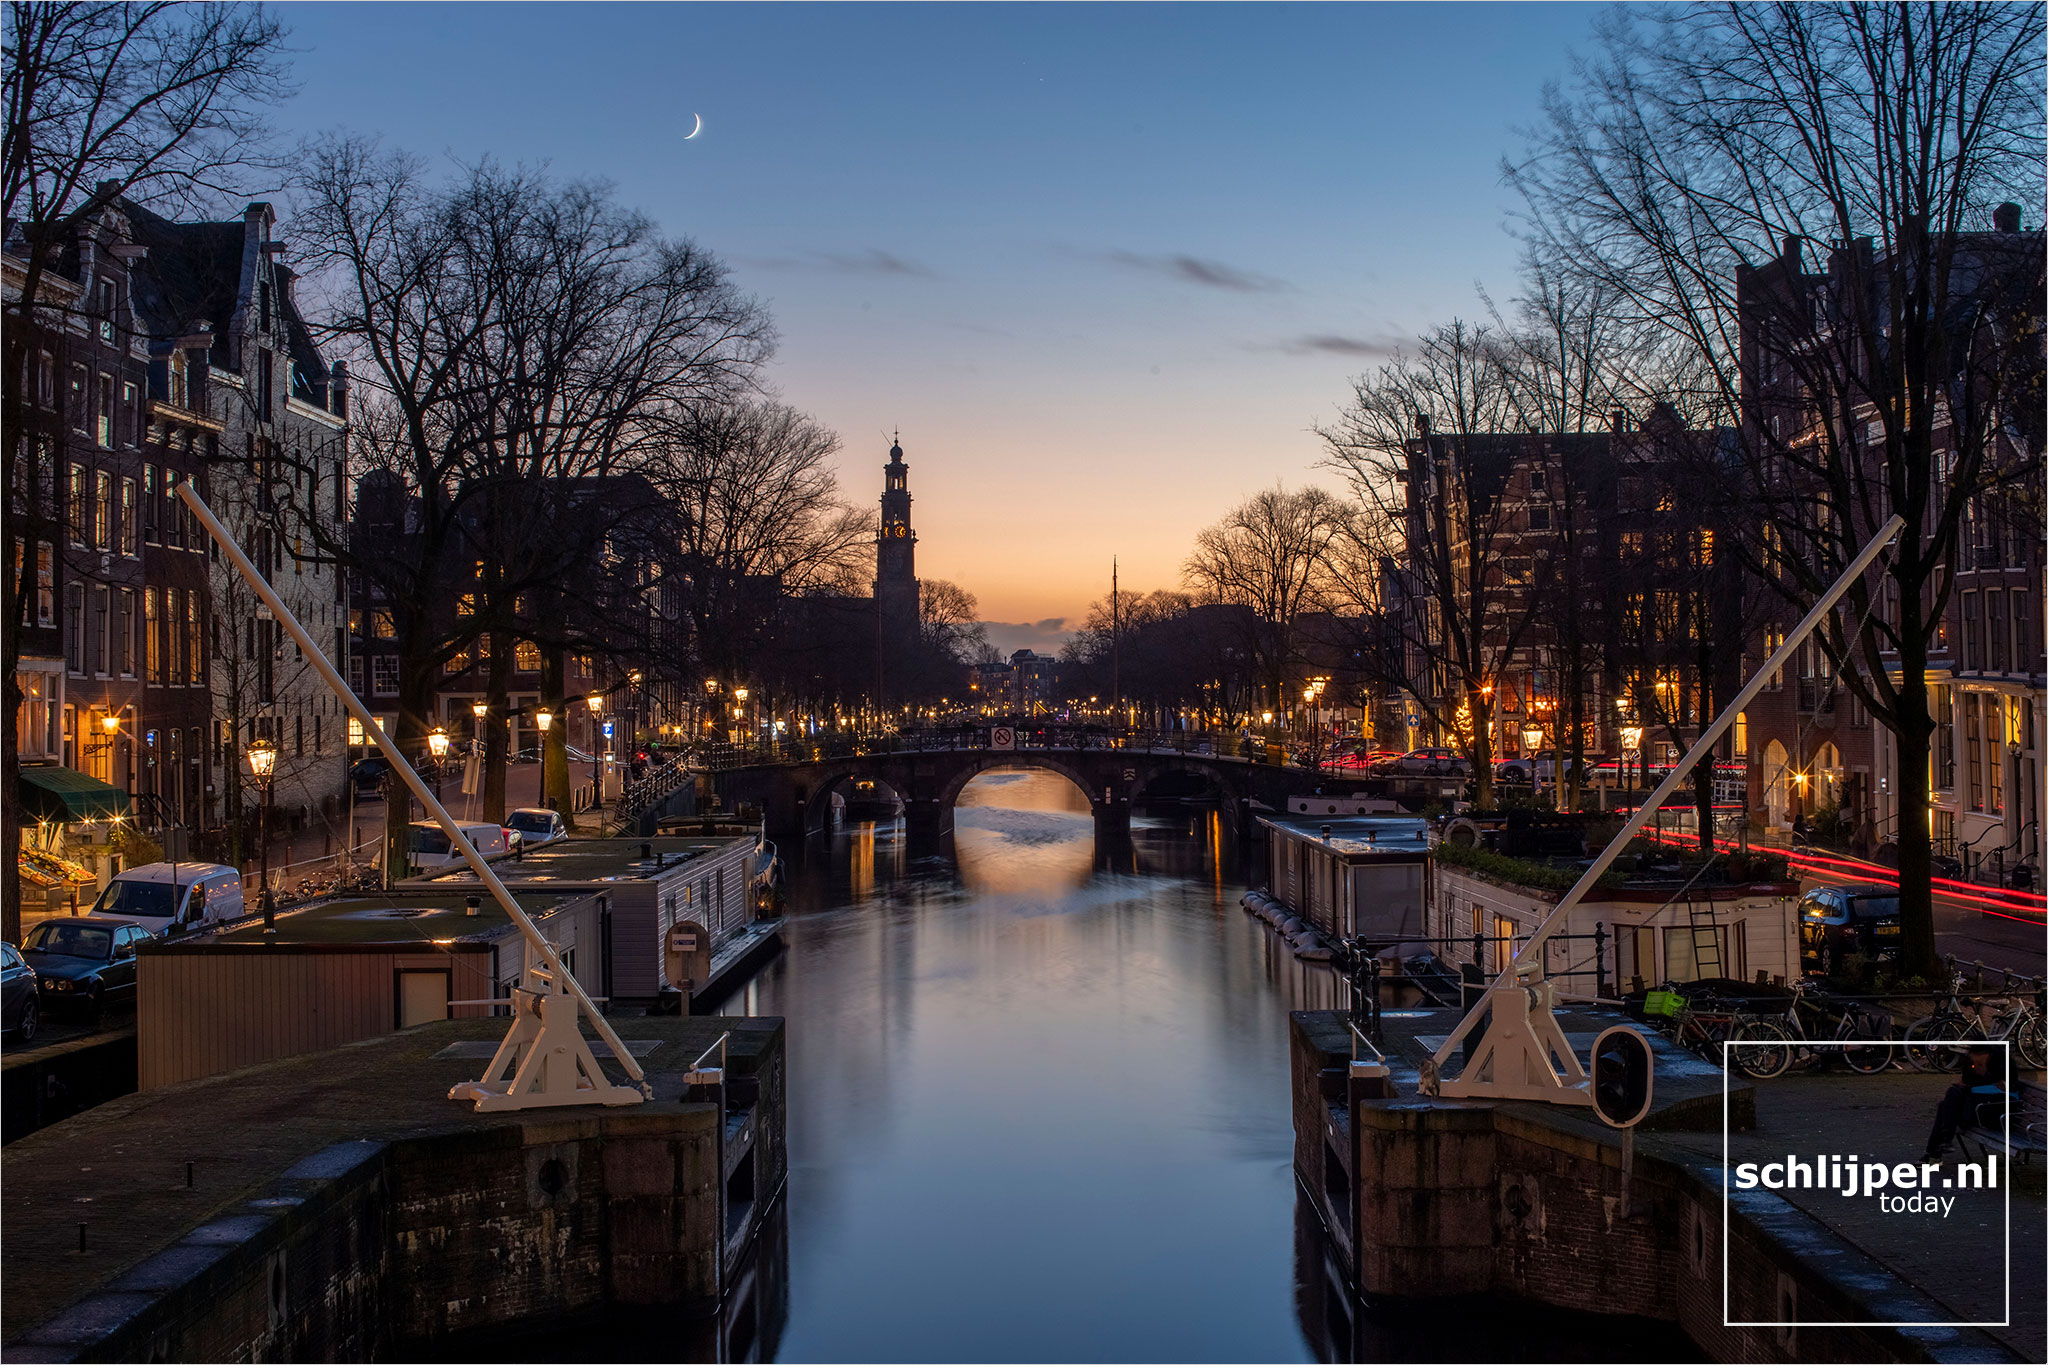 The Netherlands, Amsterdam, 17 december 2020